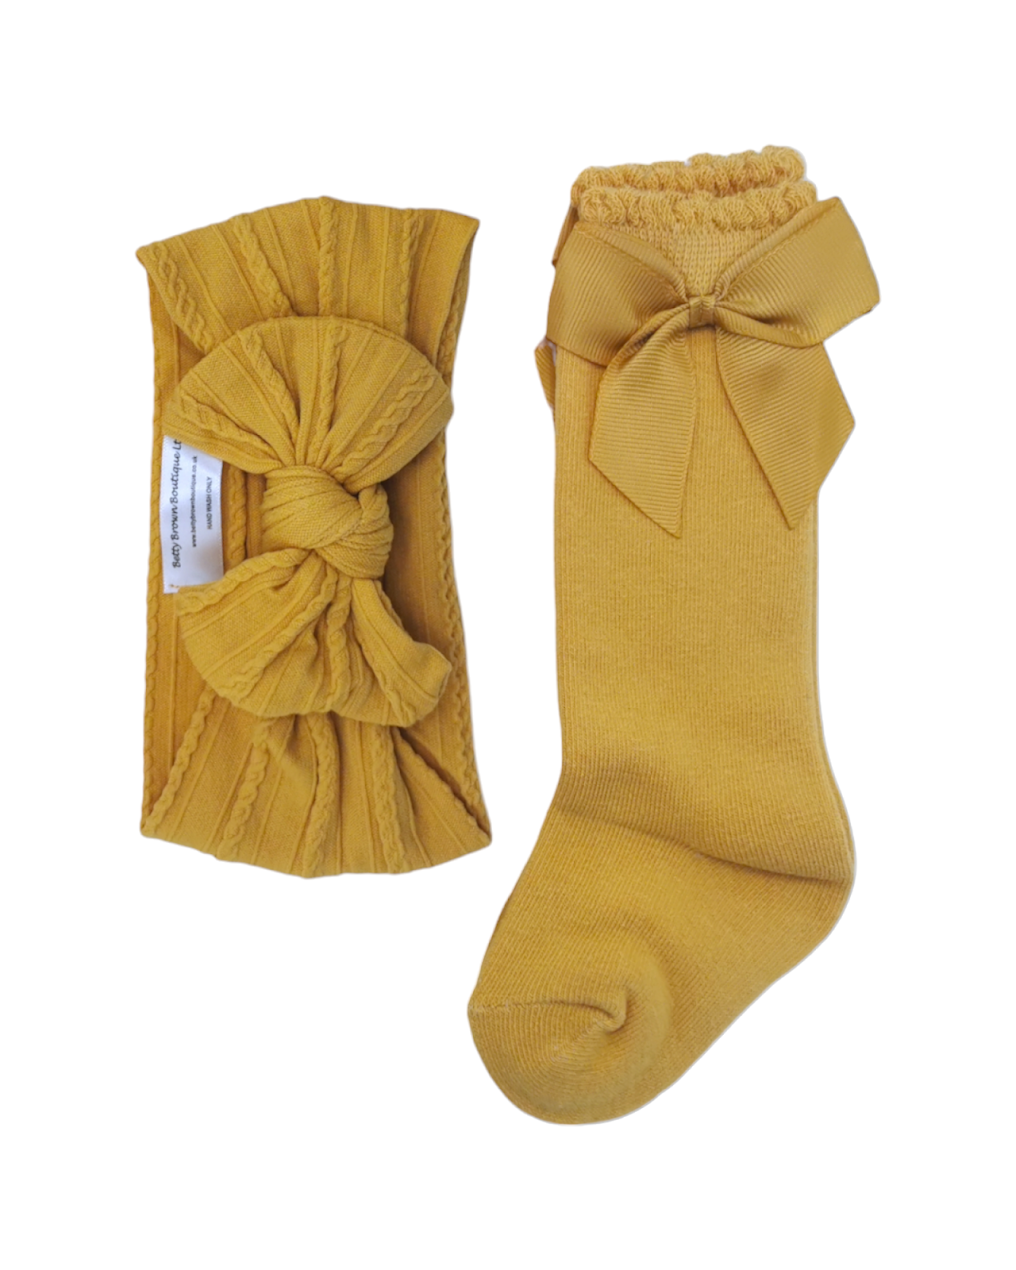 Our Dandelion Smaller Headwrap & Knee High Socks Set - Betty Brown Boutique Ltd